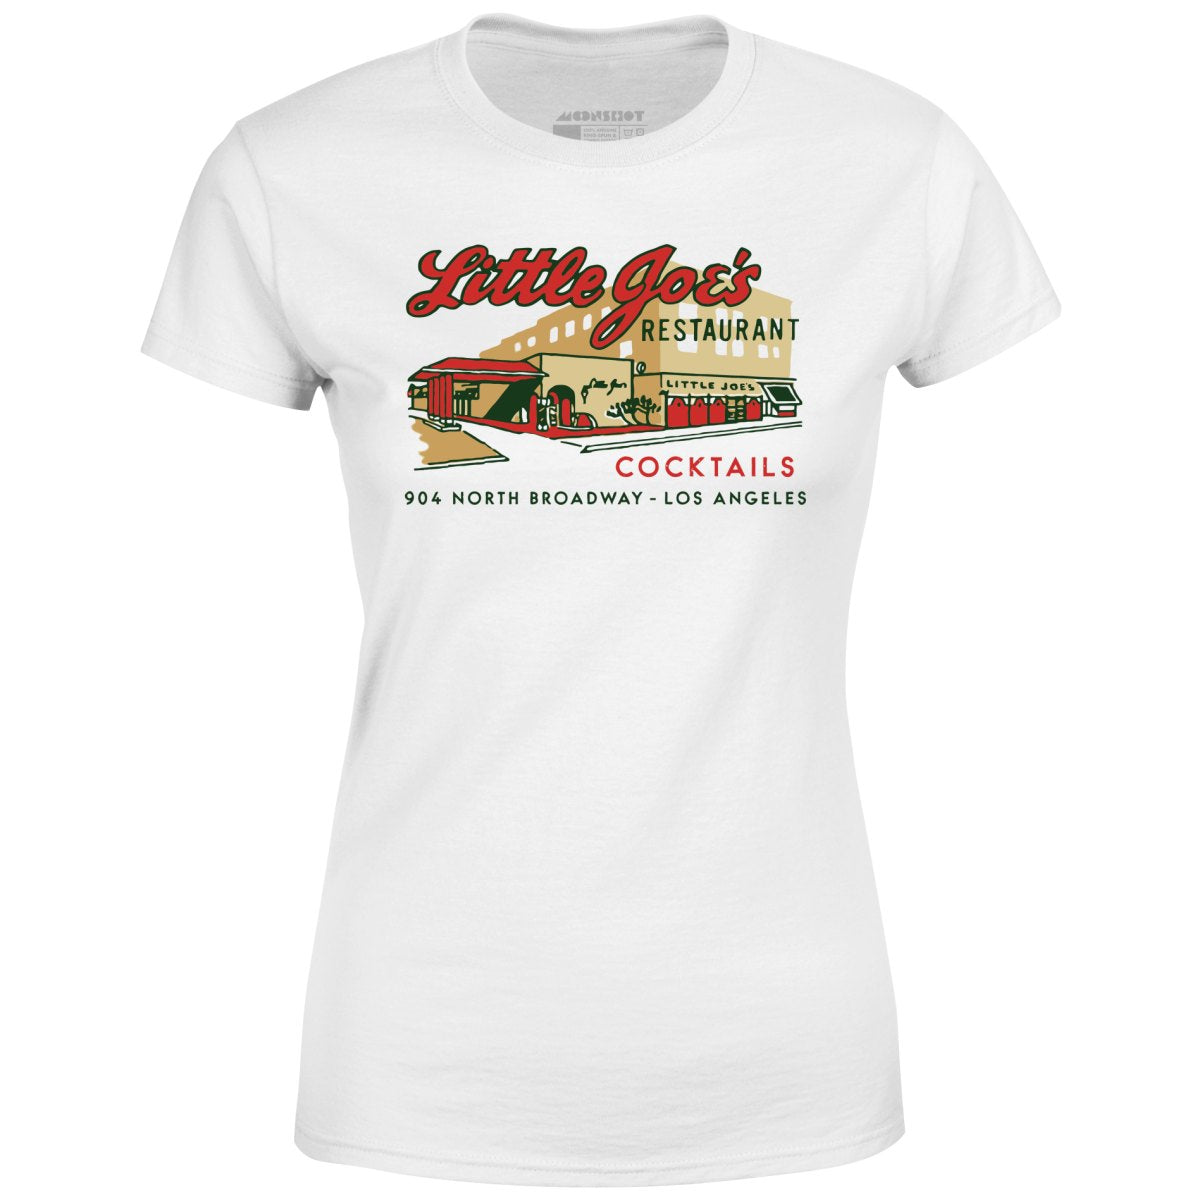 Little Joe's - Los Angeles, CA - Vintage Restaurant - Women's T-Shirt